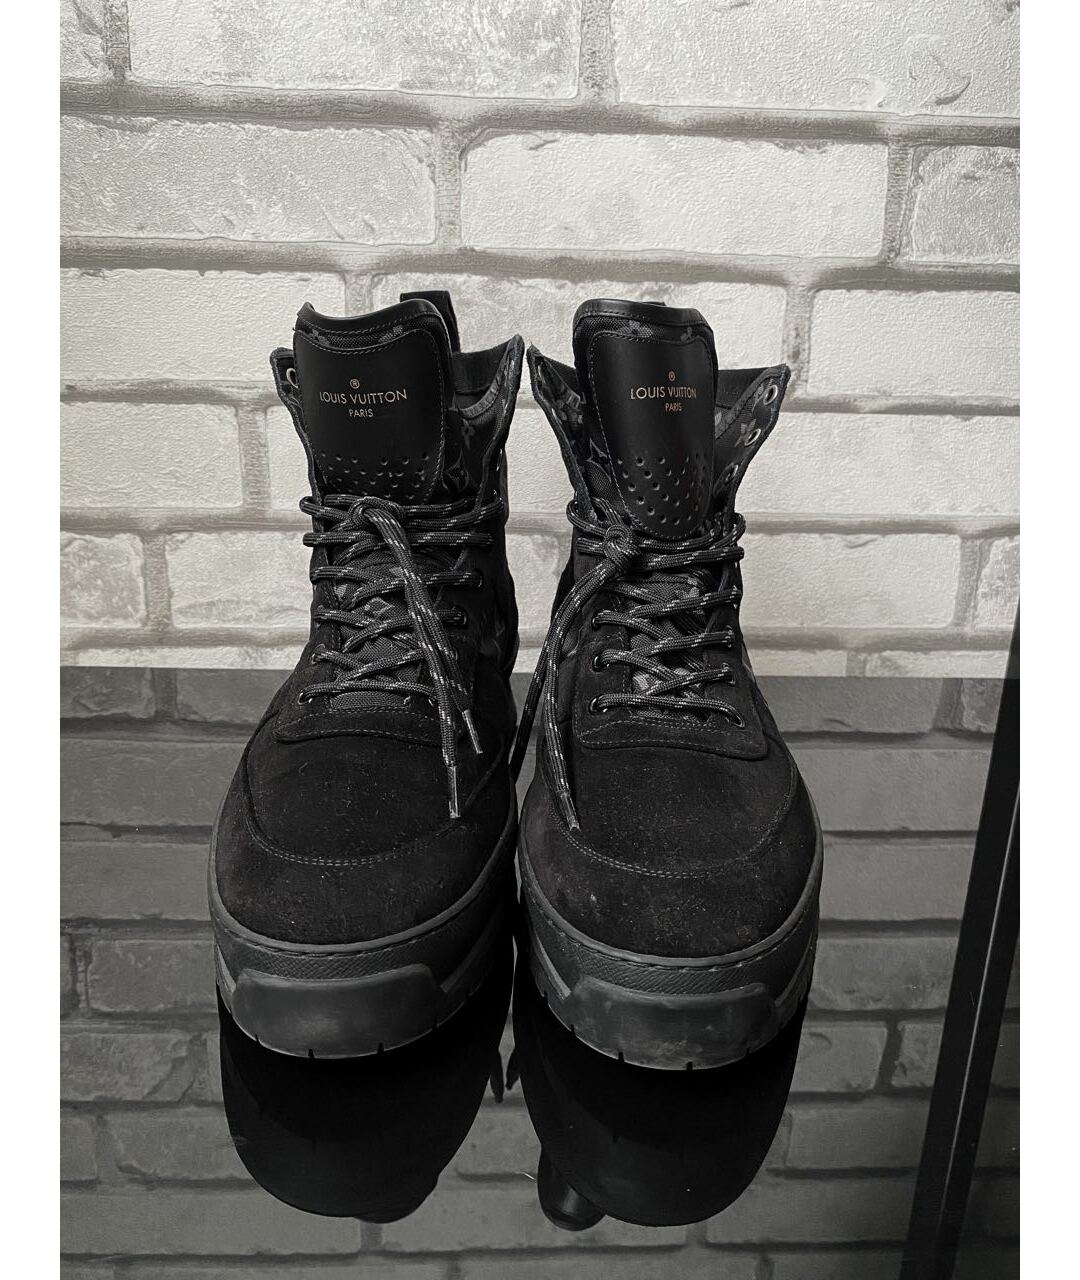 LOUIS VUITTON PRE-OWNED Черные замшевые высокие ботинки, фото 2